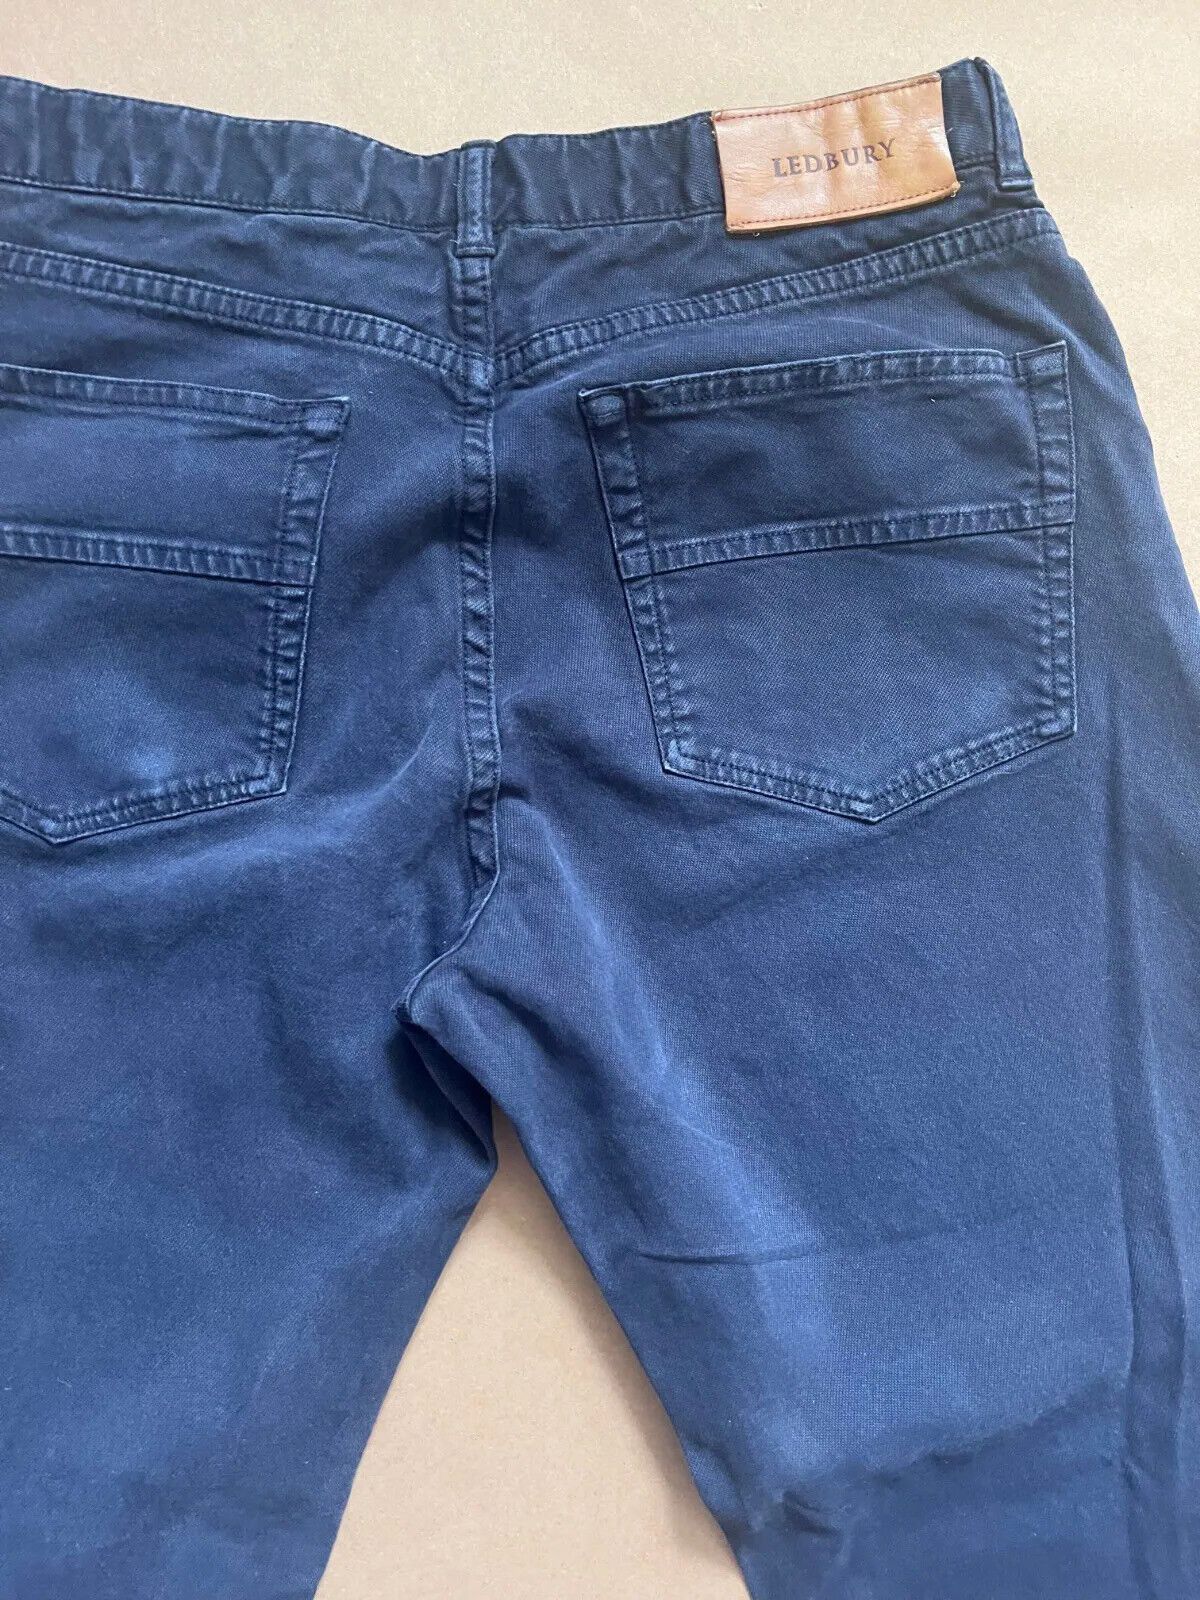 Ledbury Franklin 5 Pocket Canvas Navy Pants Jeans Men’s Size 31 | eBay